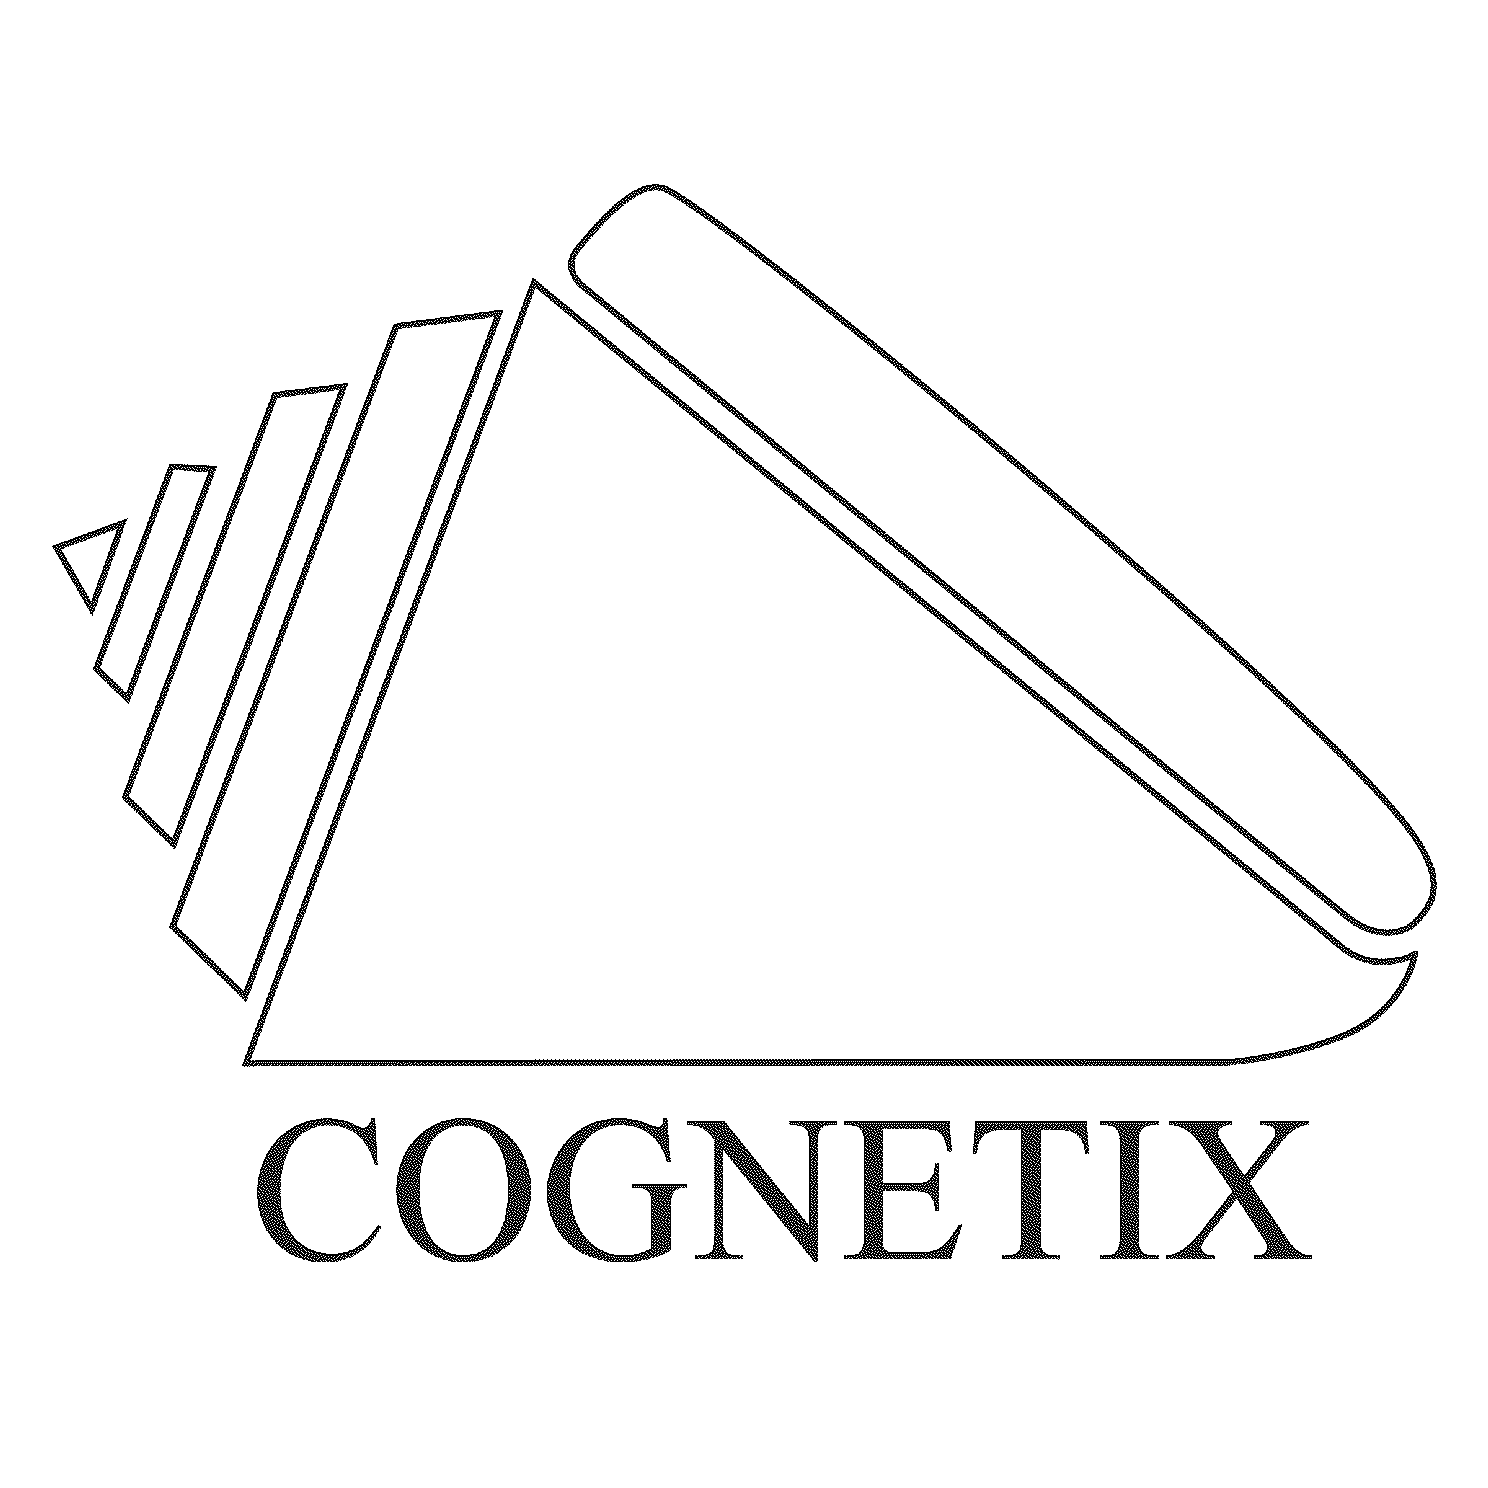  COGNETIX